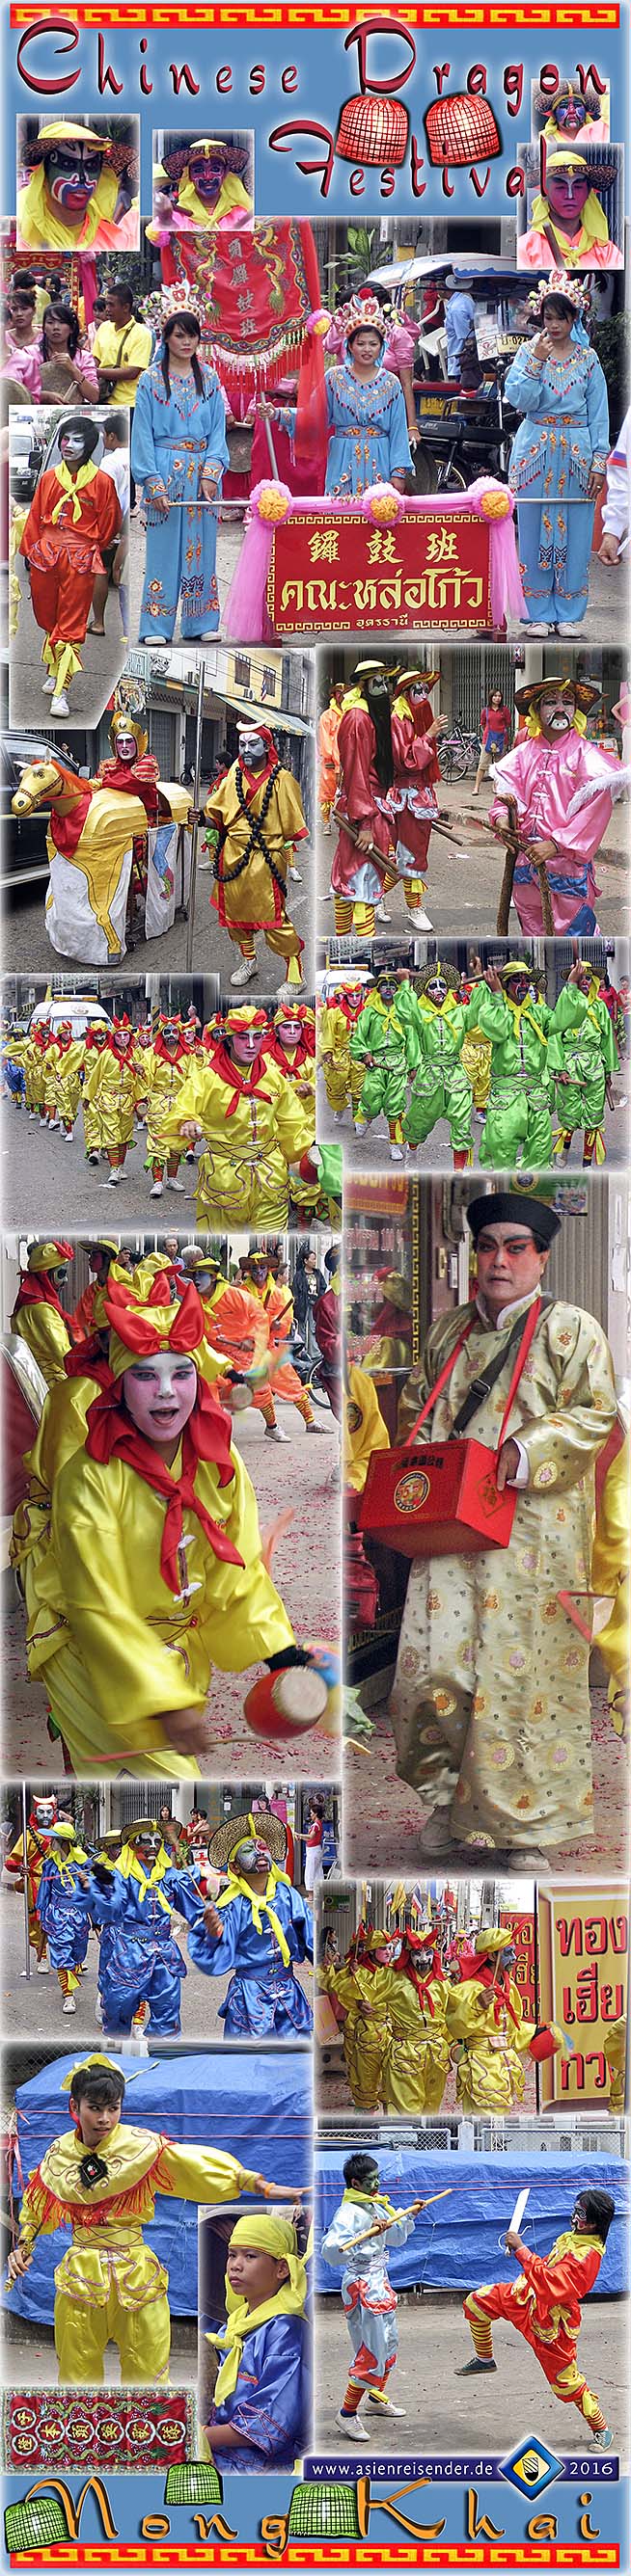 'Chinese Dragon Festival' by Asienreisender